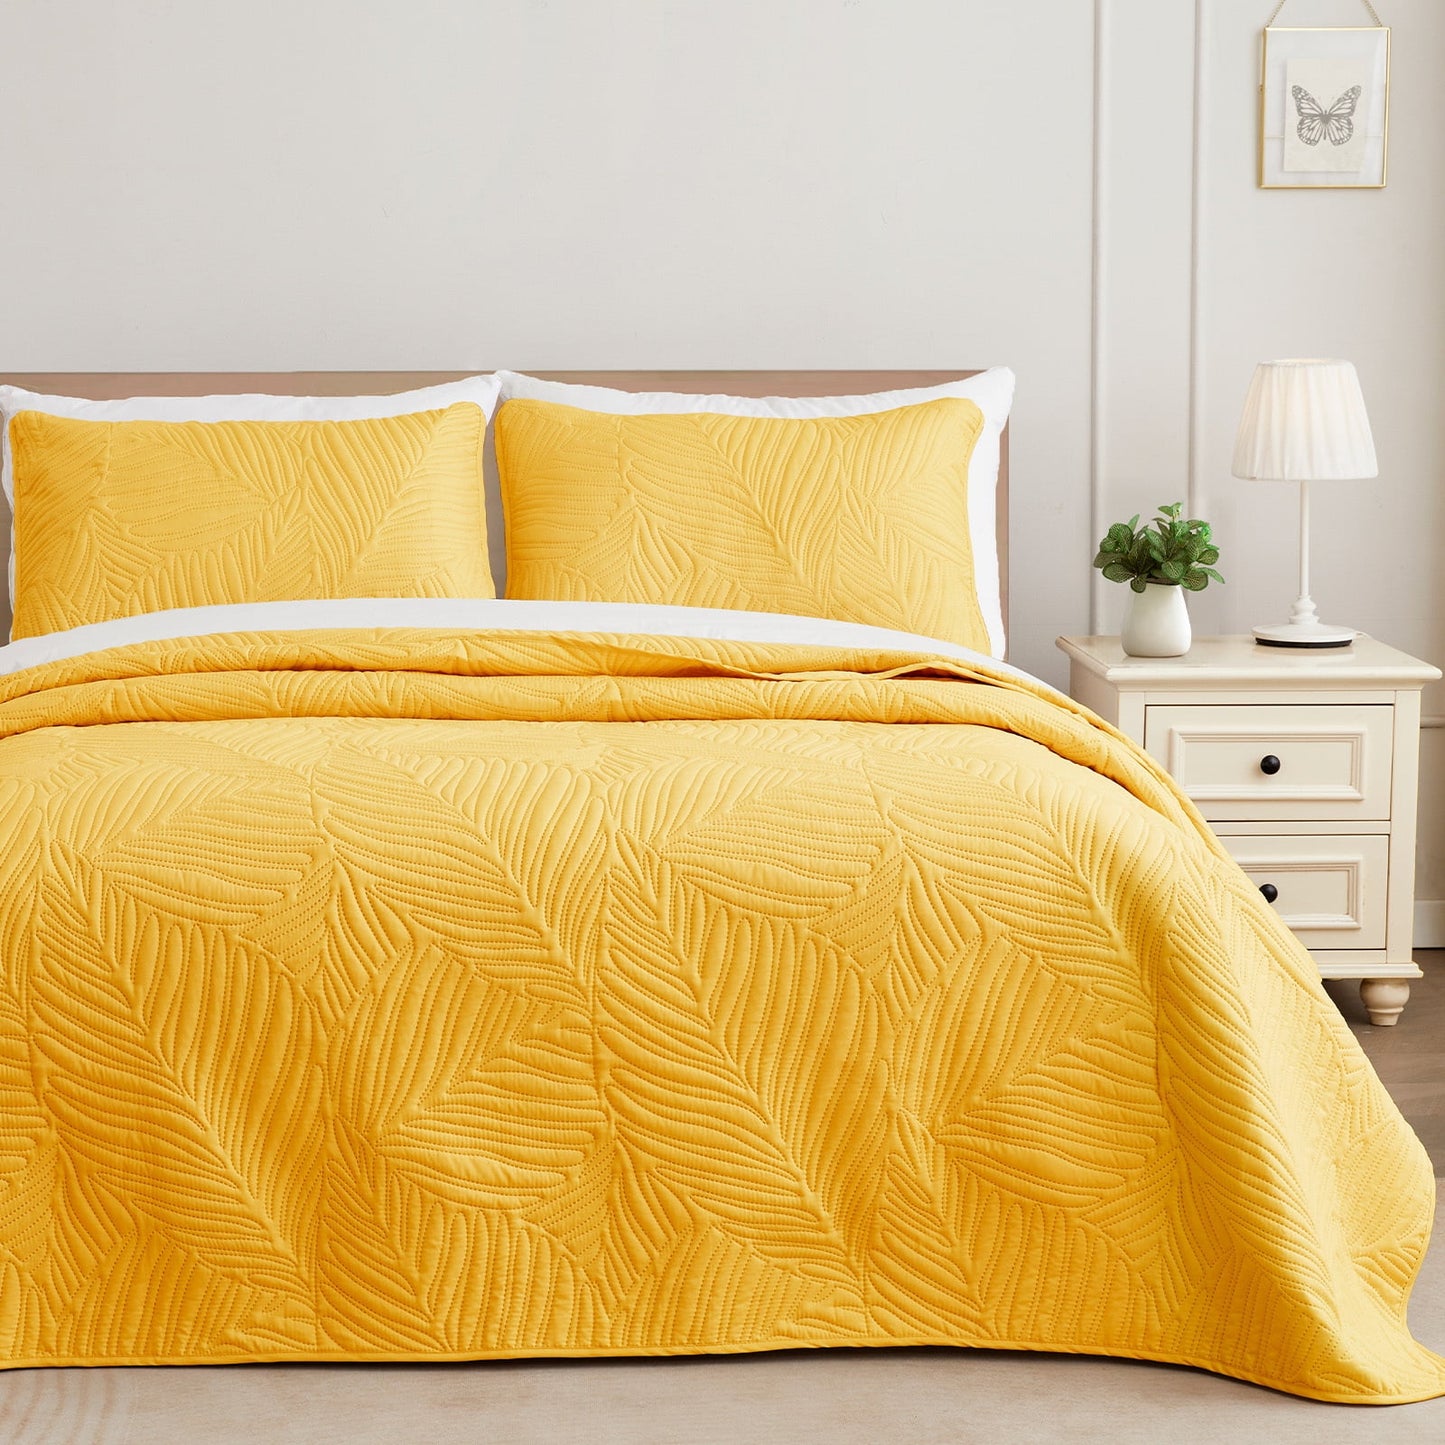 Exclusivo Mezcla Full Queen Quilt Set Yellow, Lightweight Bedspread Leaf Pattern Bed Cover Soft Coverlet Bedding Set(1 Quilt, 2 Pillow Shams)